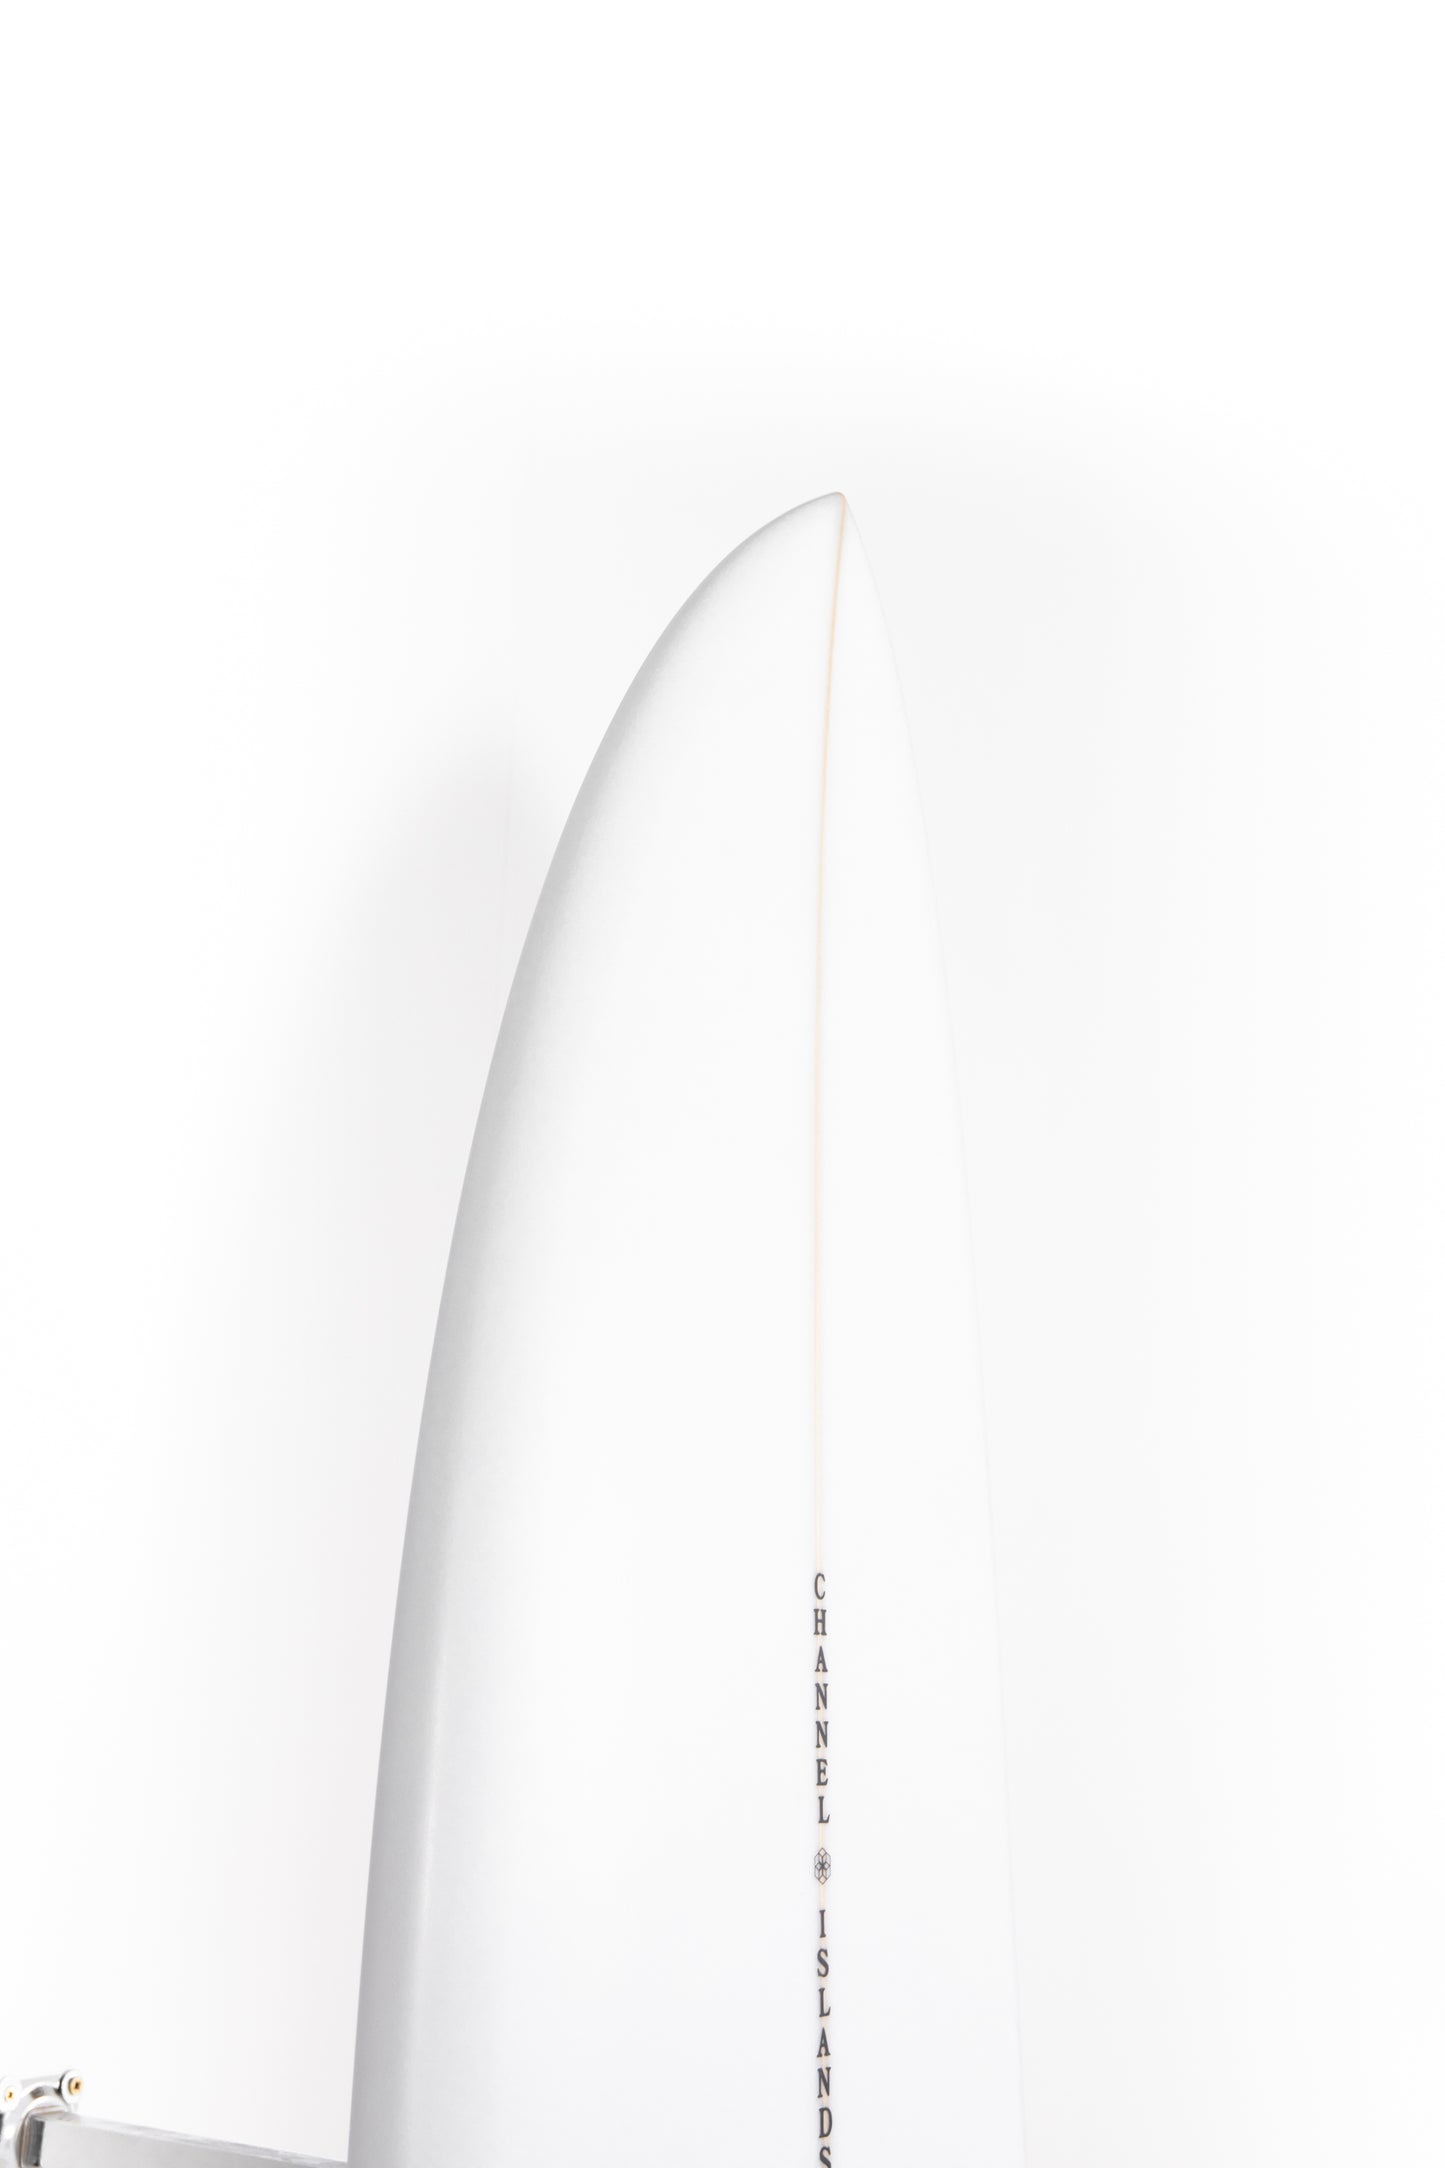 
                  
                    Pukas Surf Shop - Channel Islands - CI MID TWIN - 6'11" x 21 1/8 x 2 13/16 - 45,33L - CI30801
                  
                